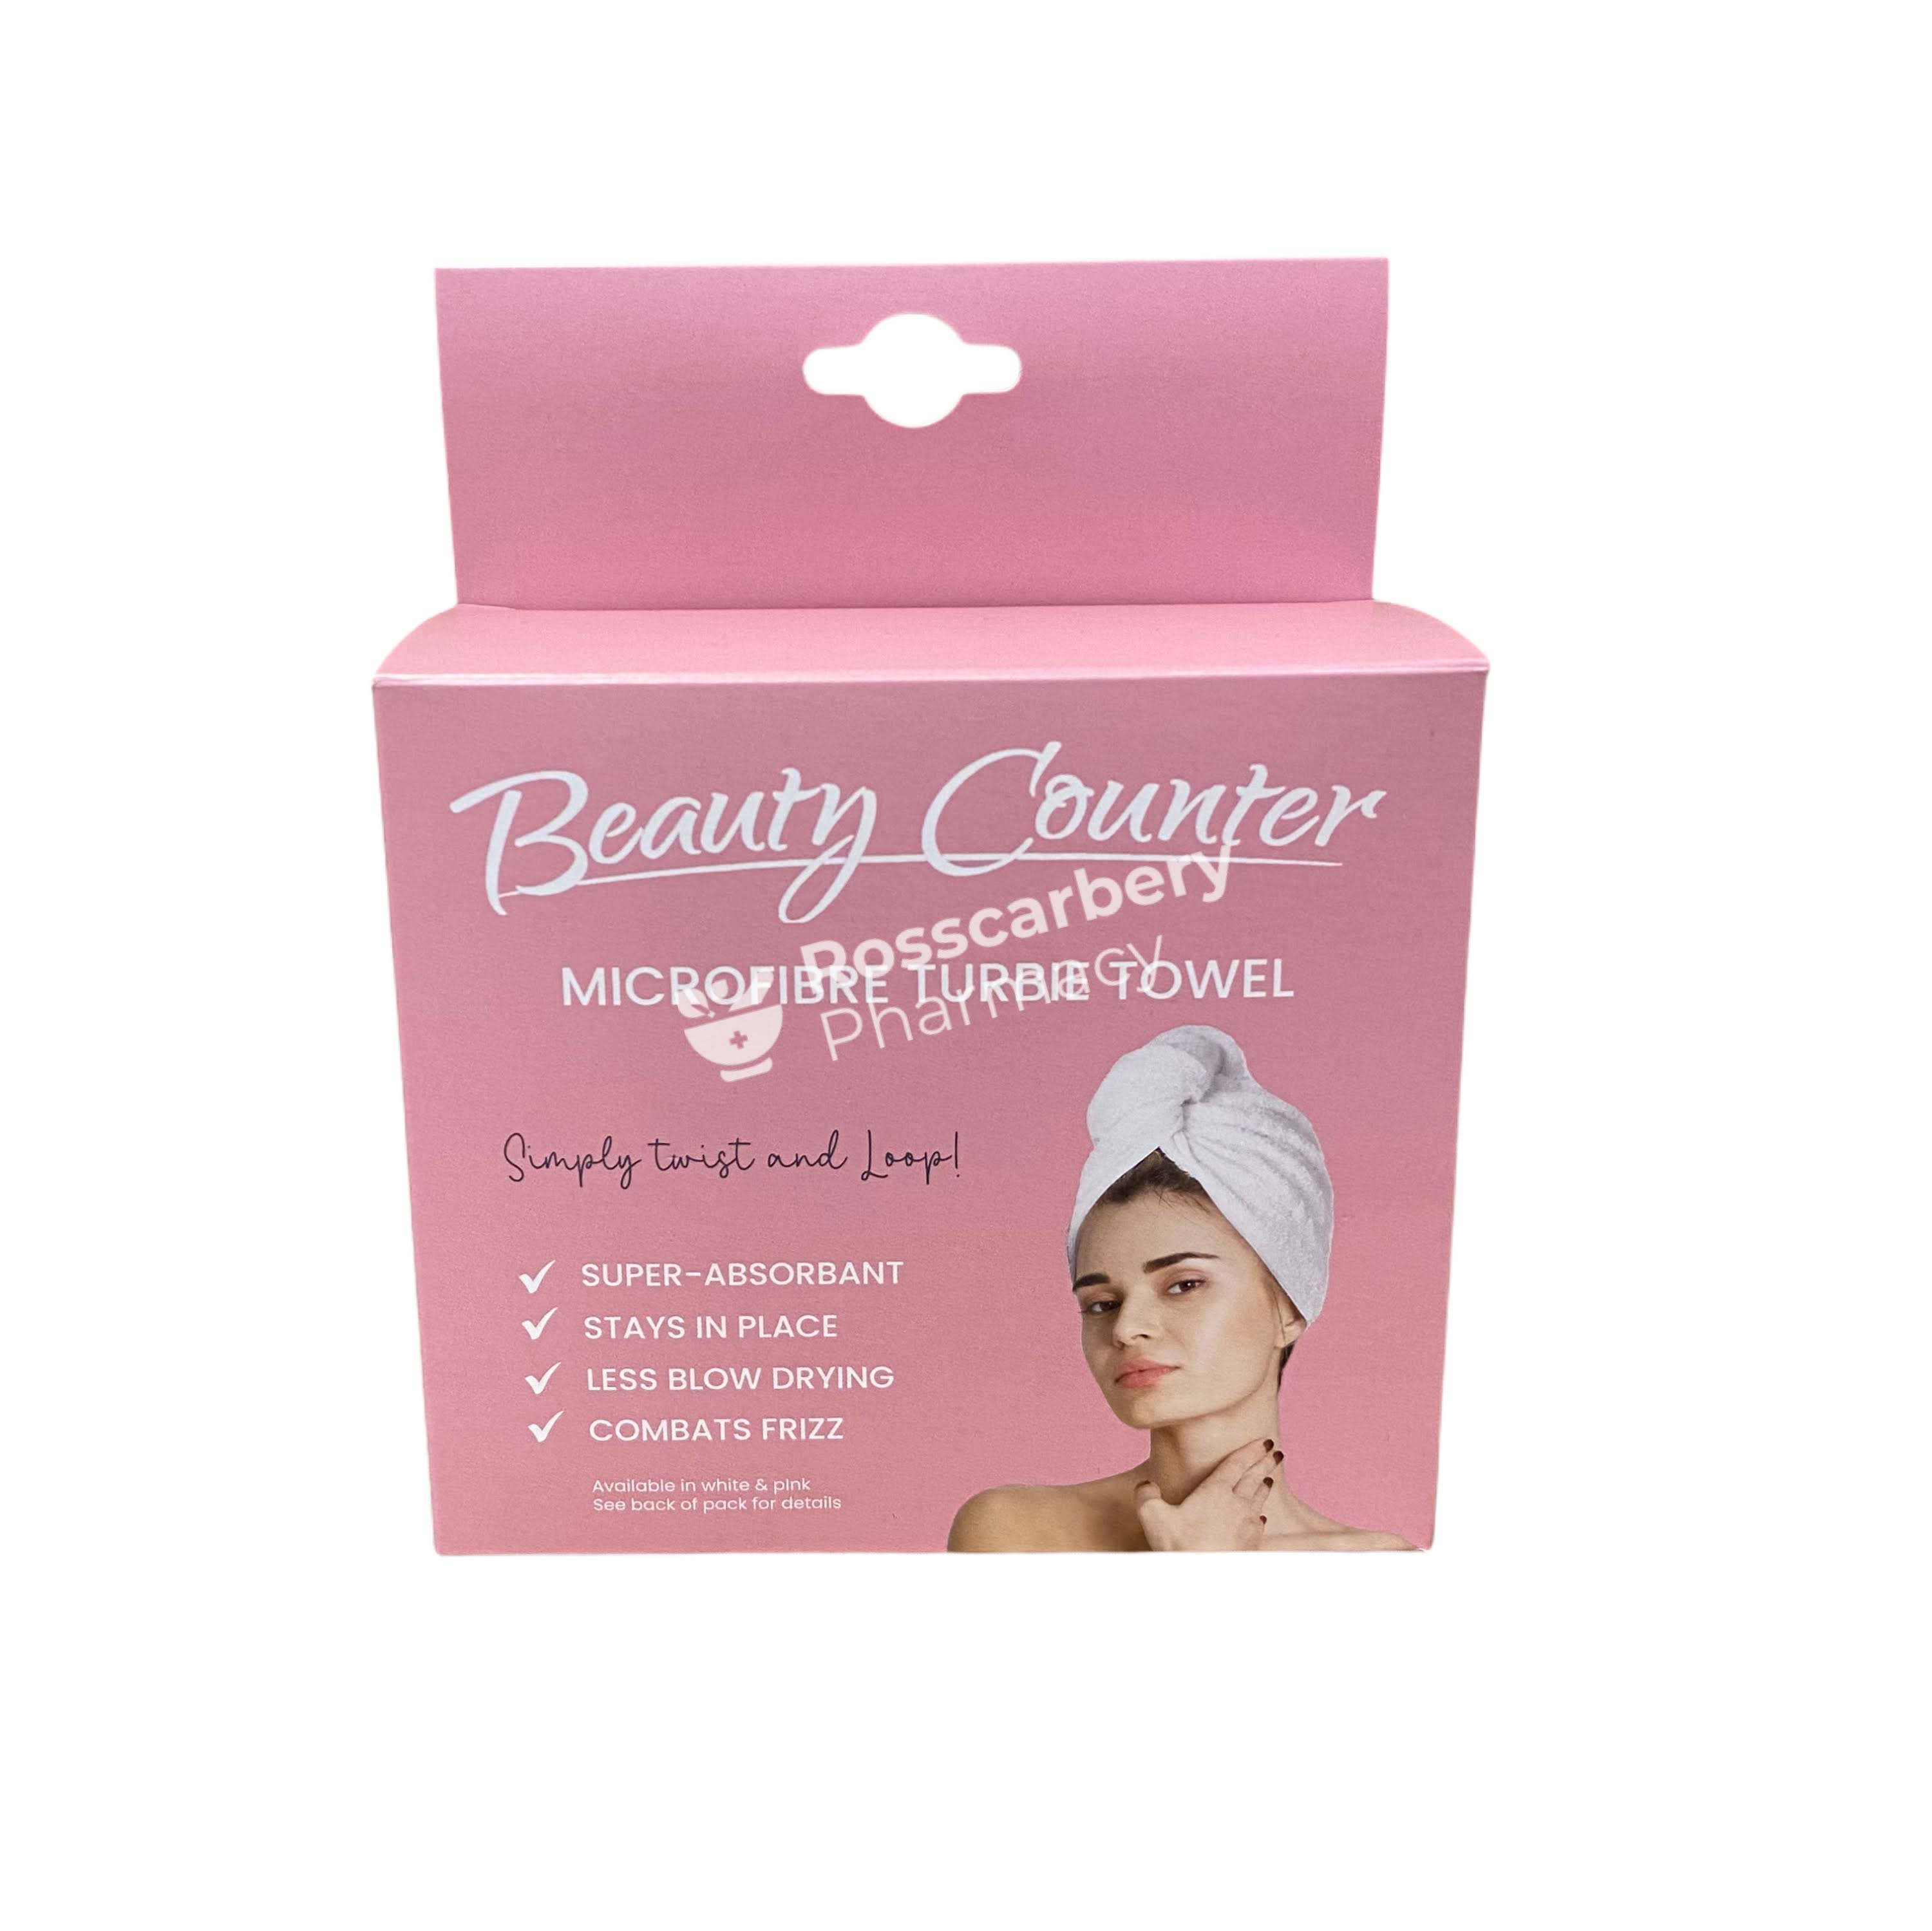 Beauty Counter Microfibre Turbie Towel Pink